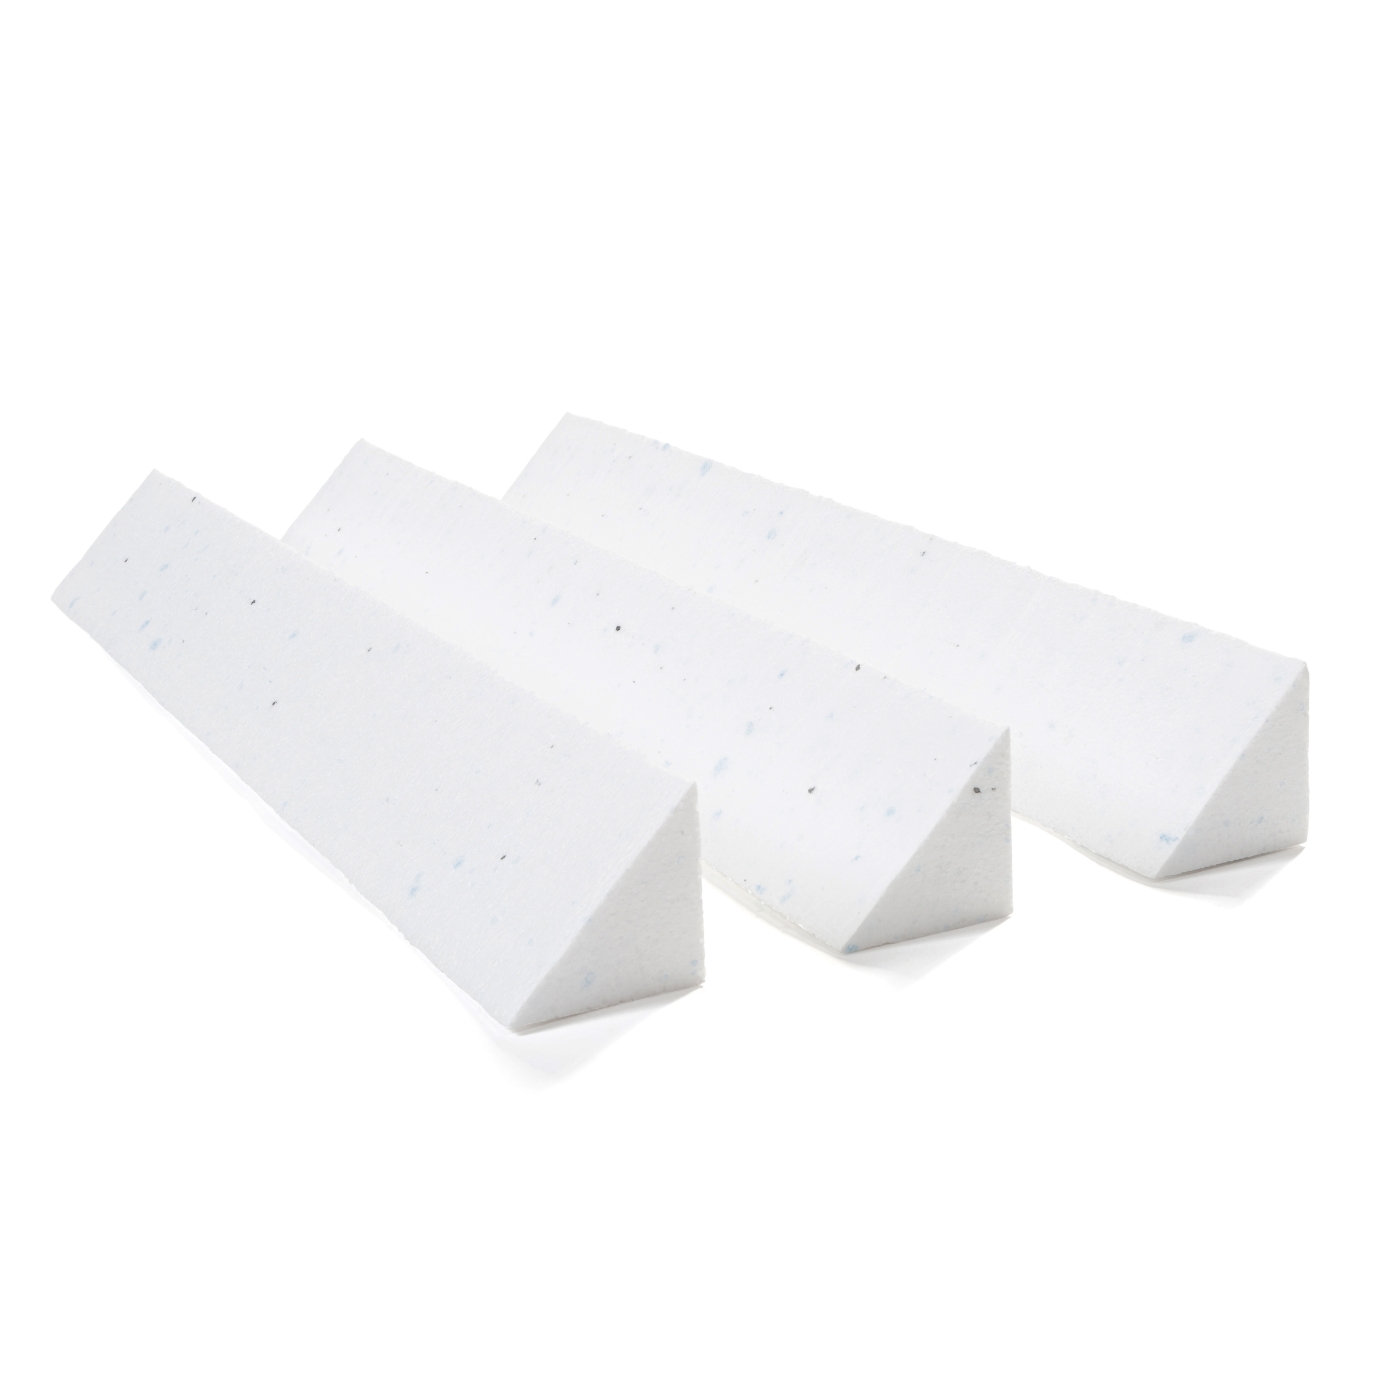 Styrofoam wedges